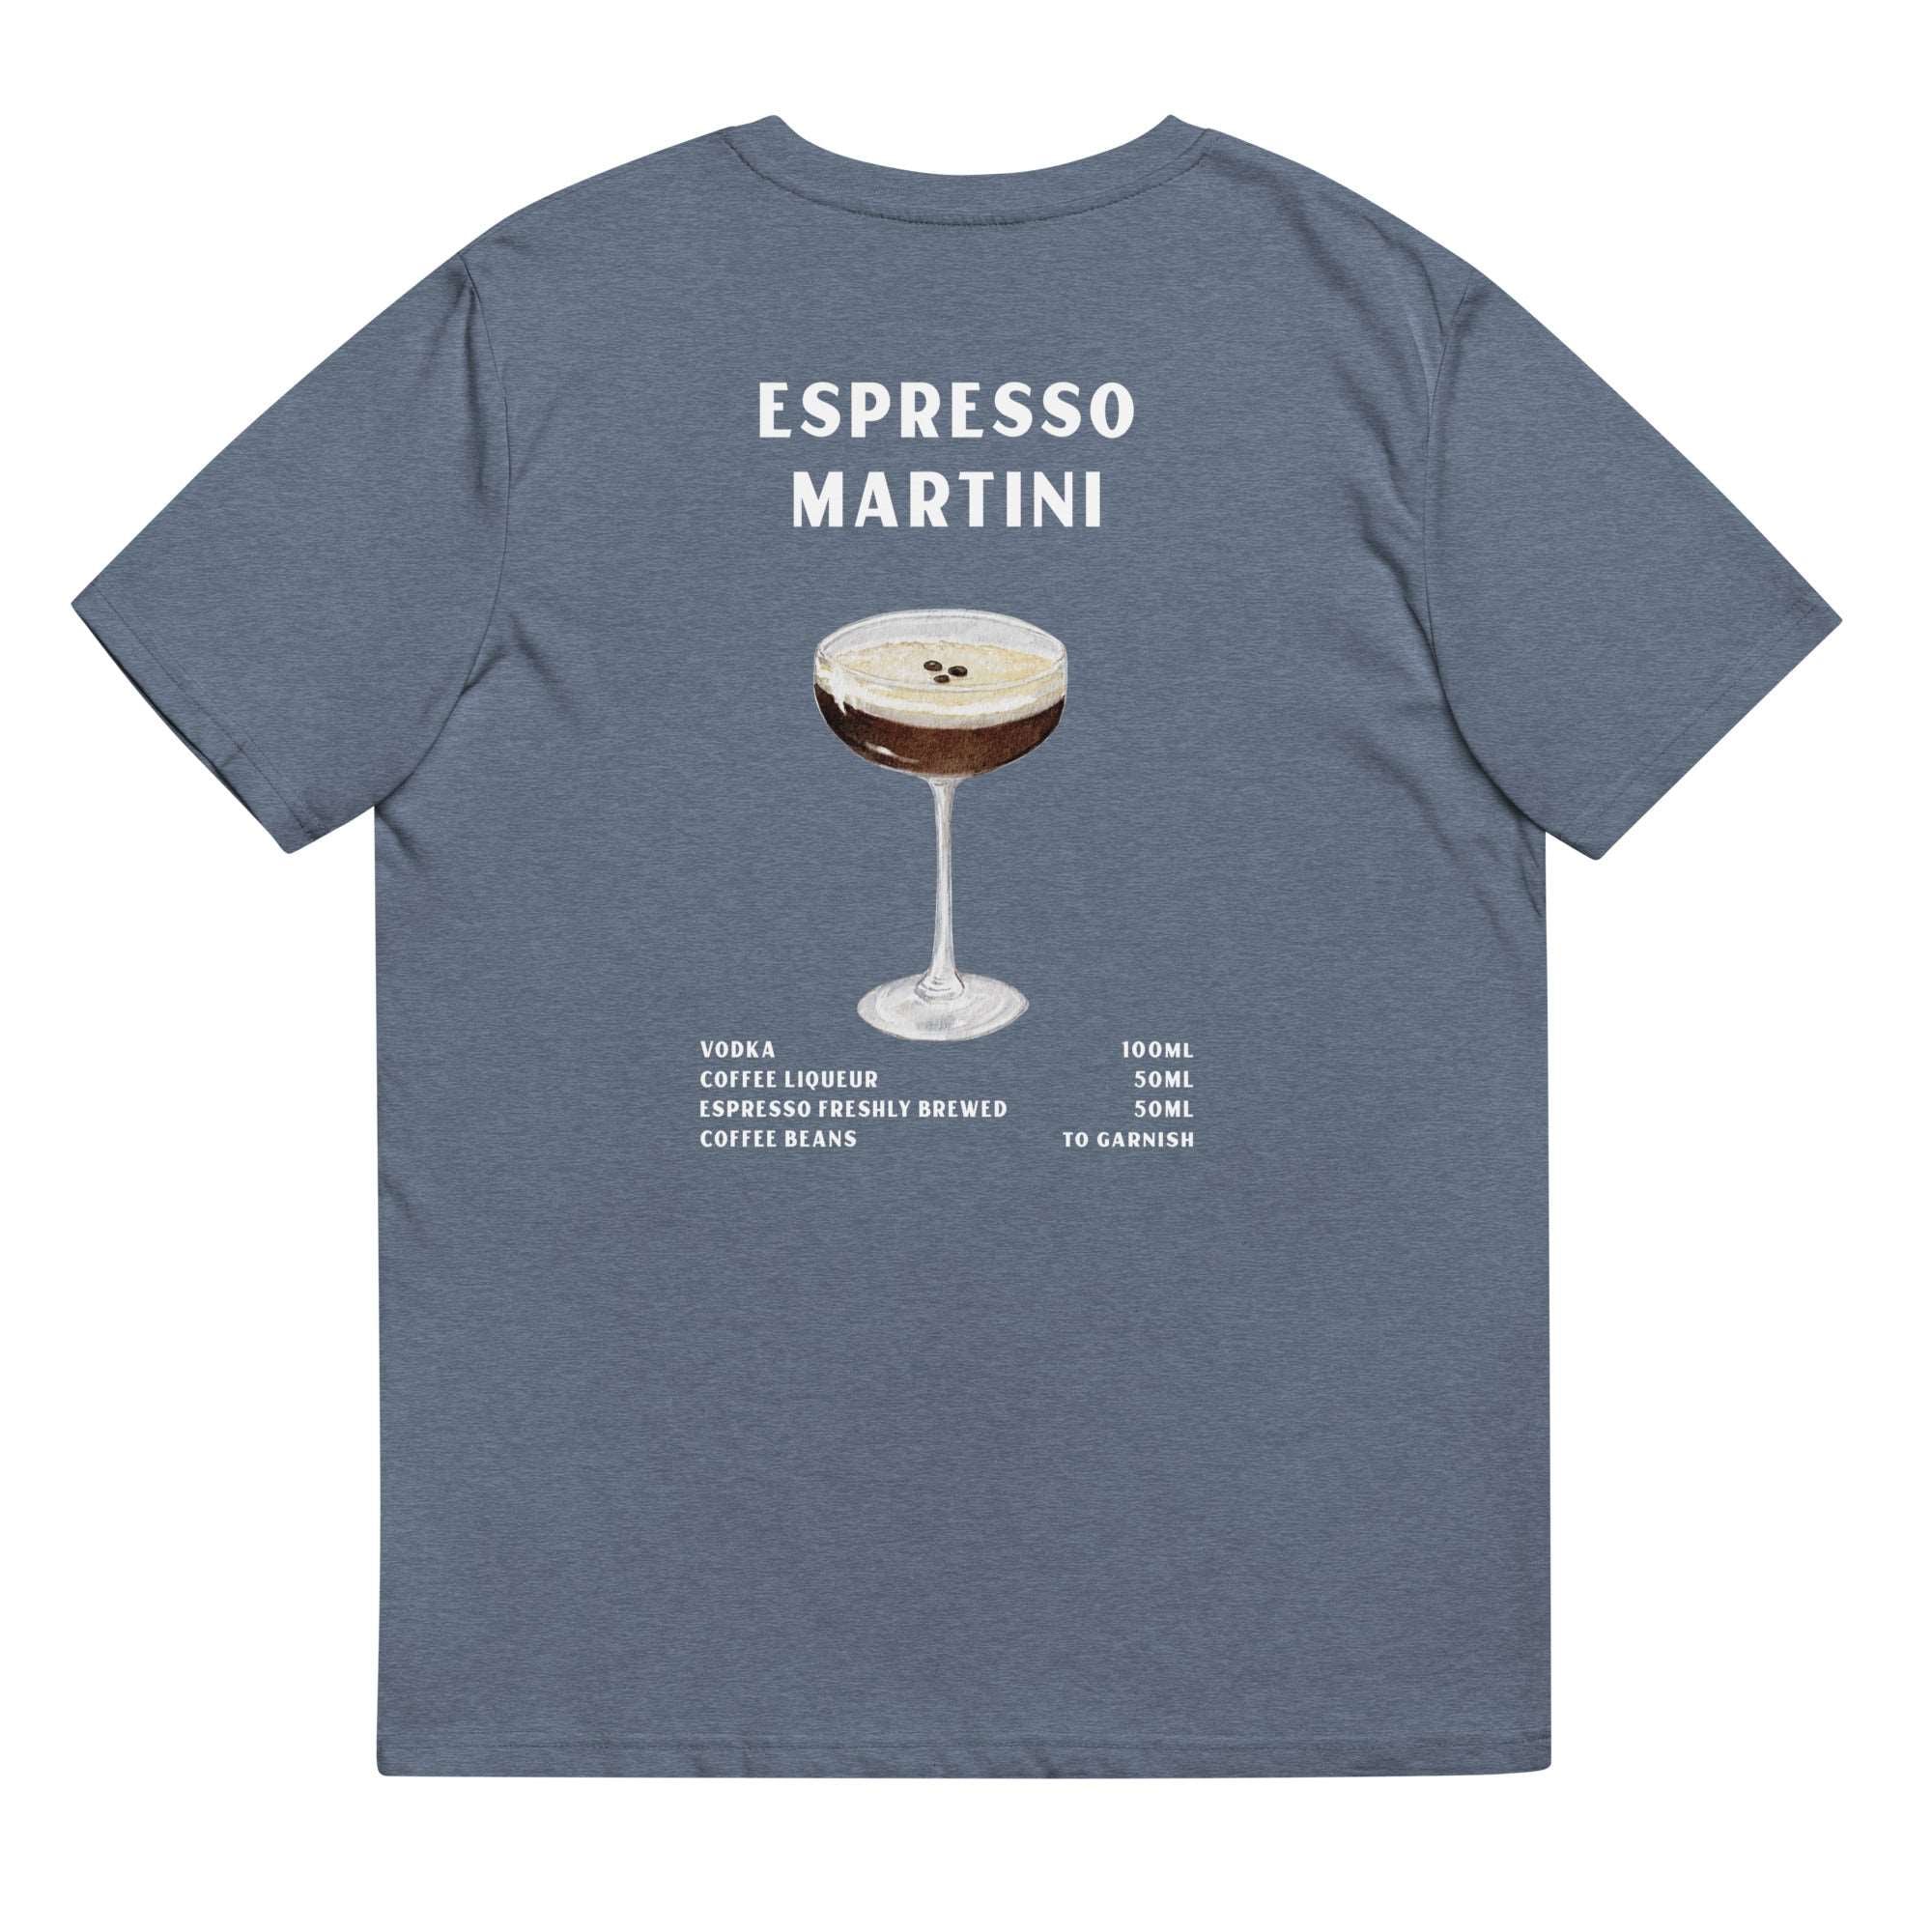 Espresso Martini - Organic T-shirt - The Refined Spirit